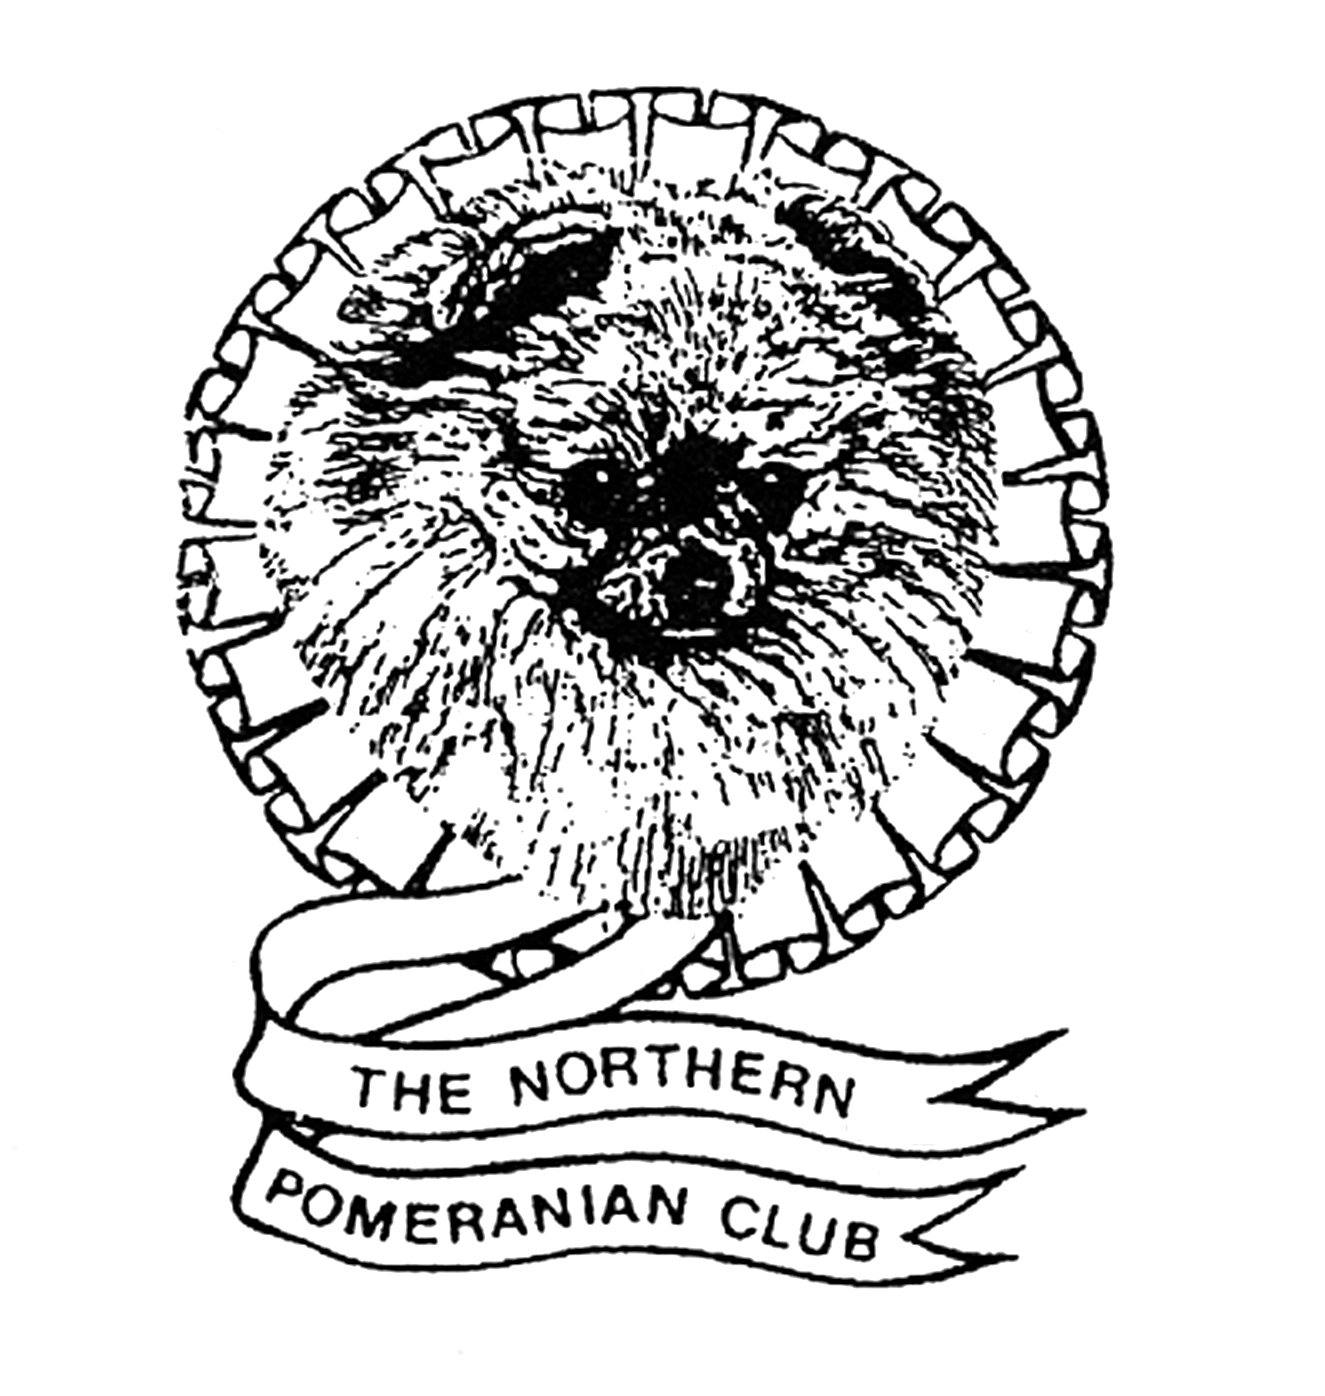 THE NORTHERN POMERANIAN CLUB - Open